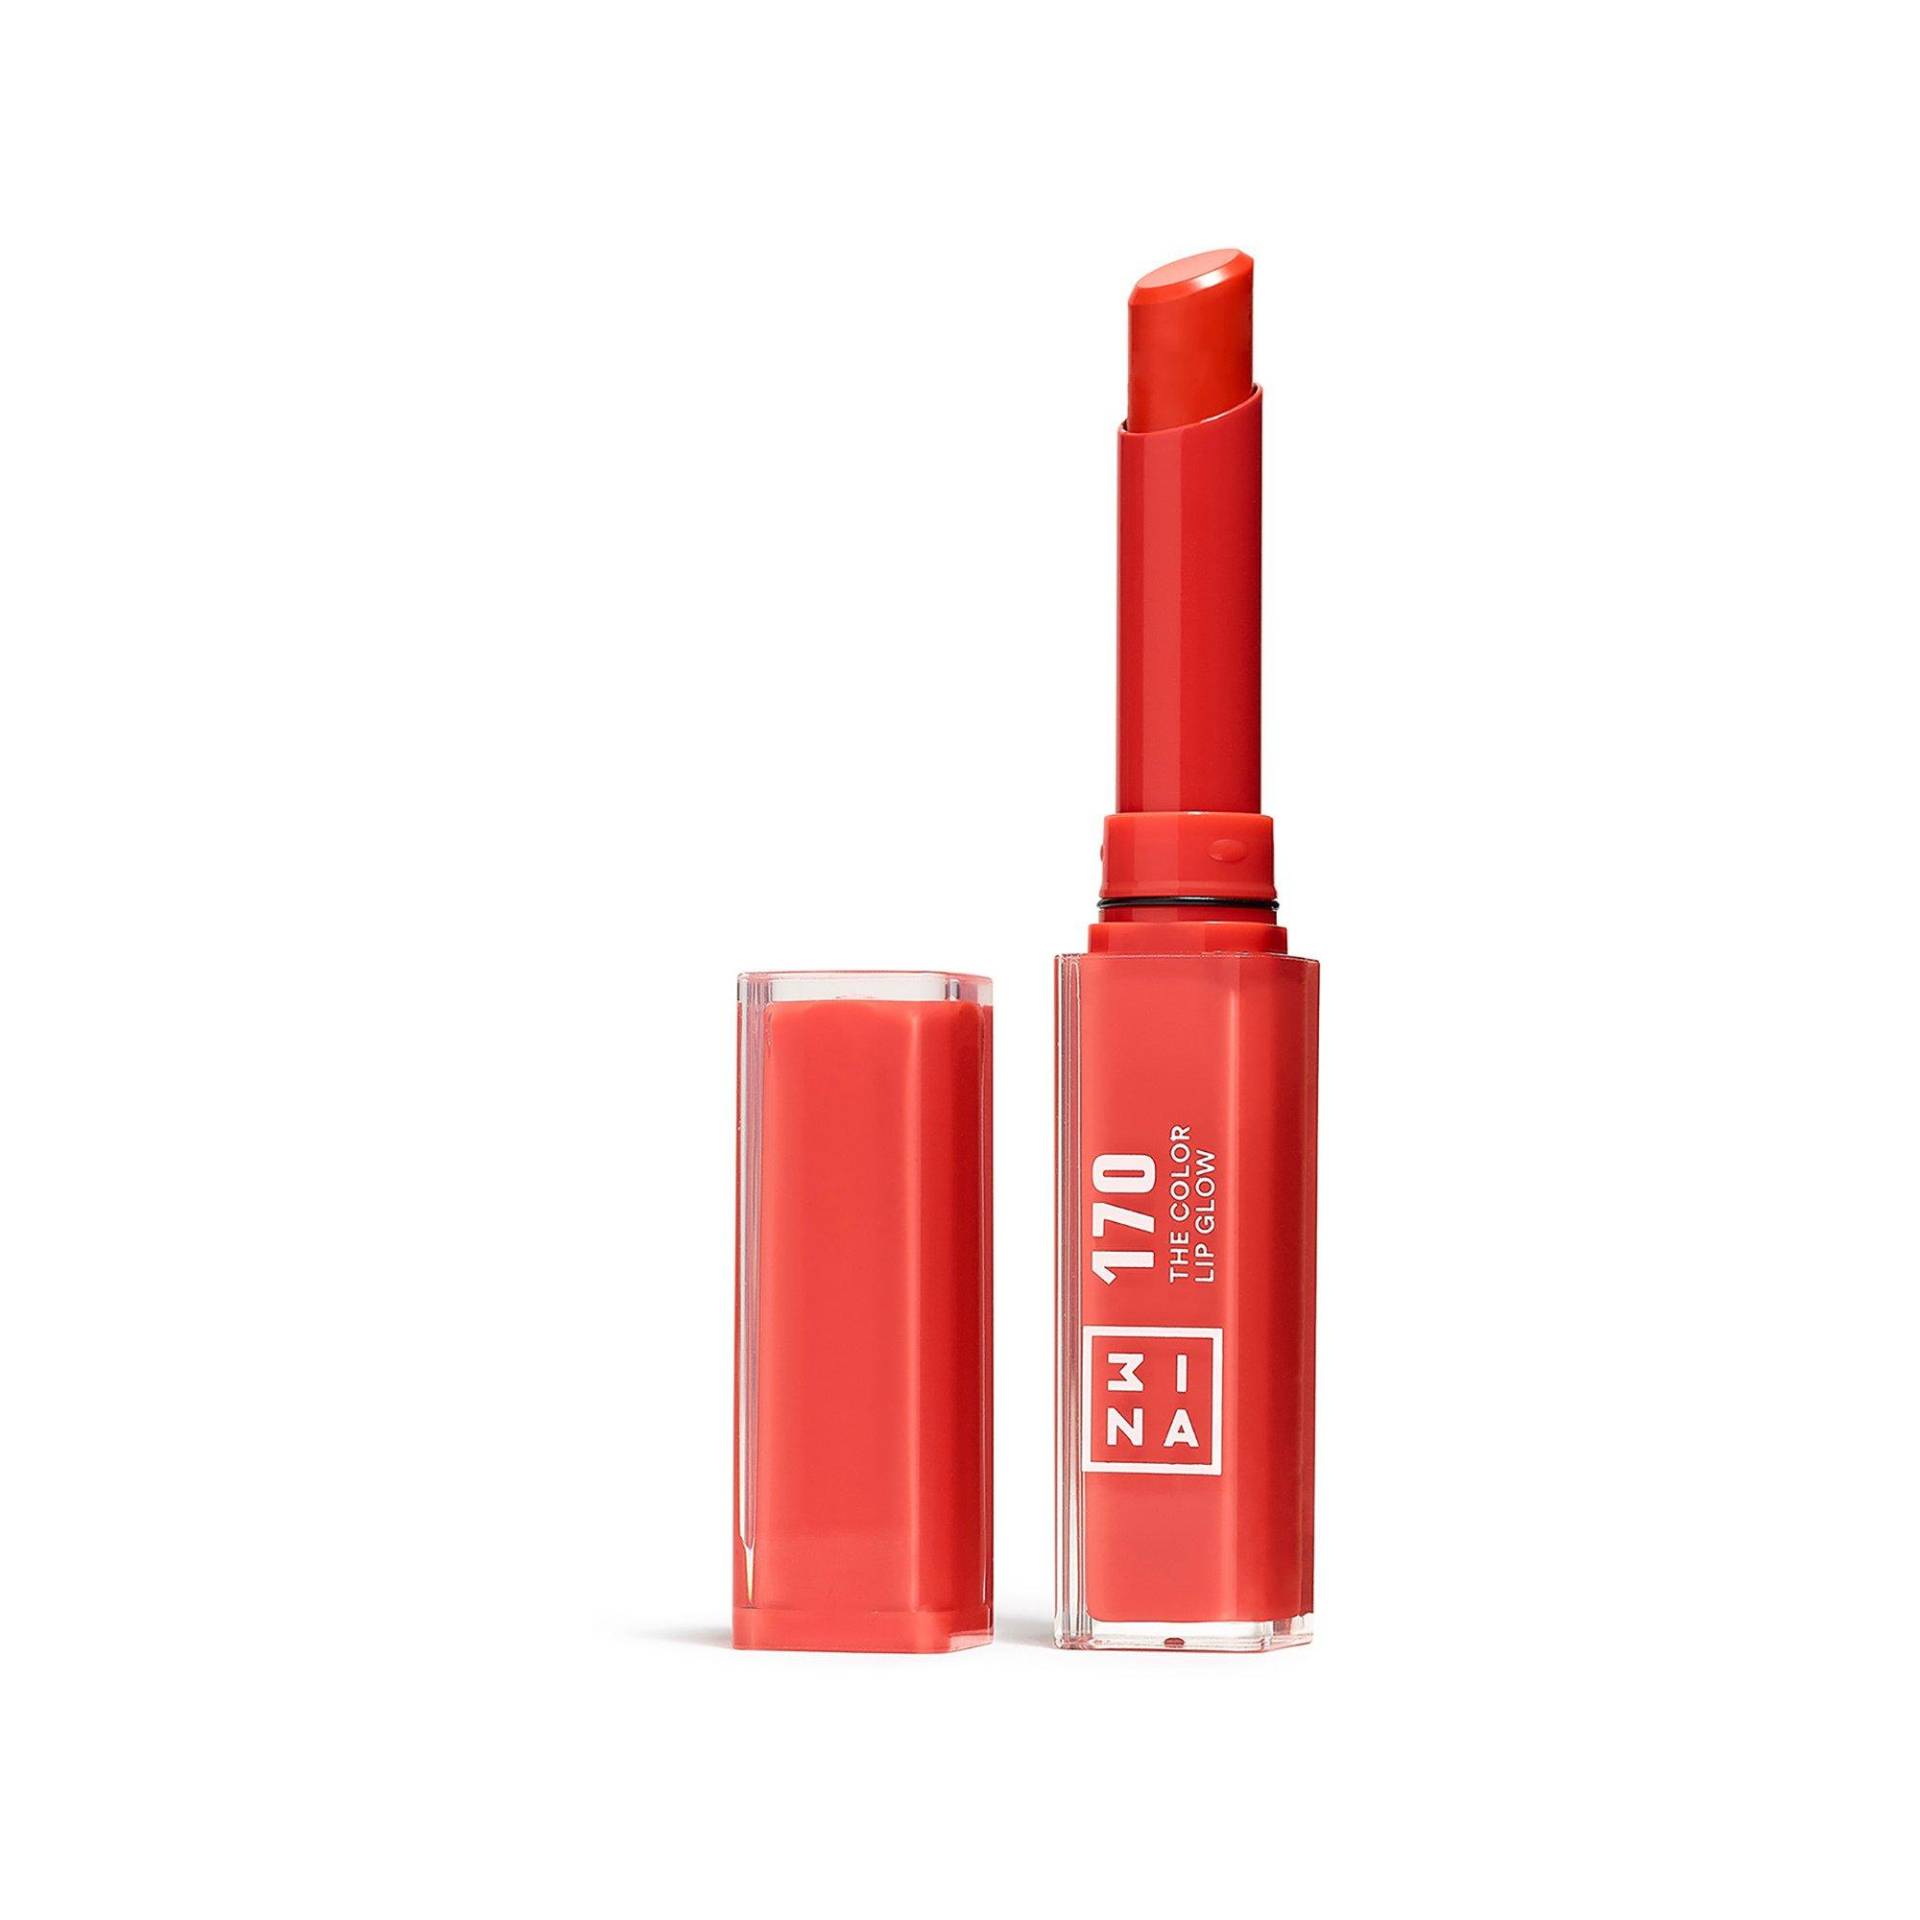 The Color Lip Glow Damen  Orange Tile 1.6G von 3INA